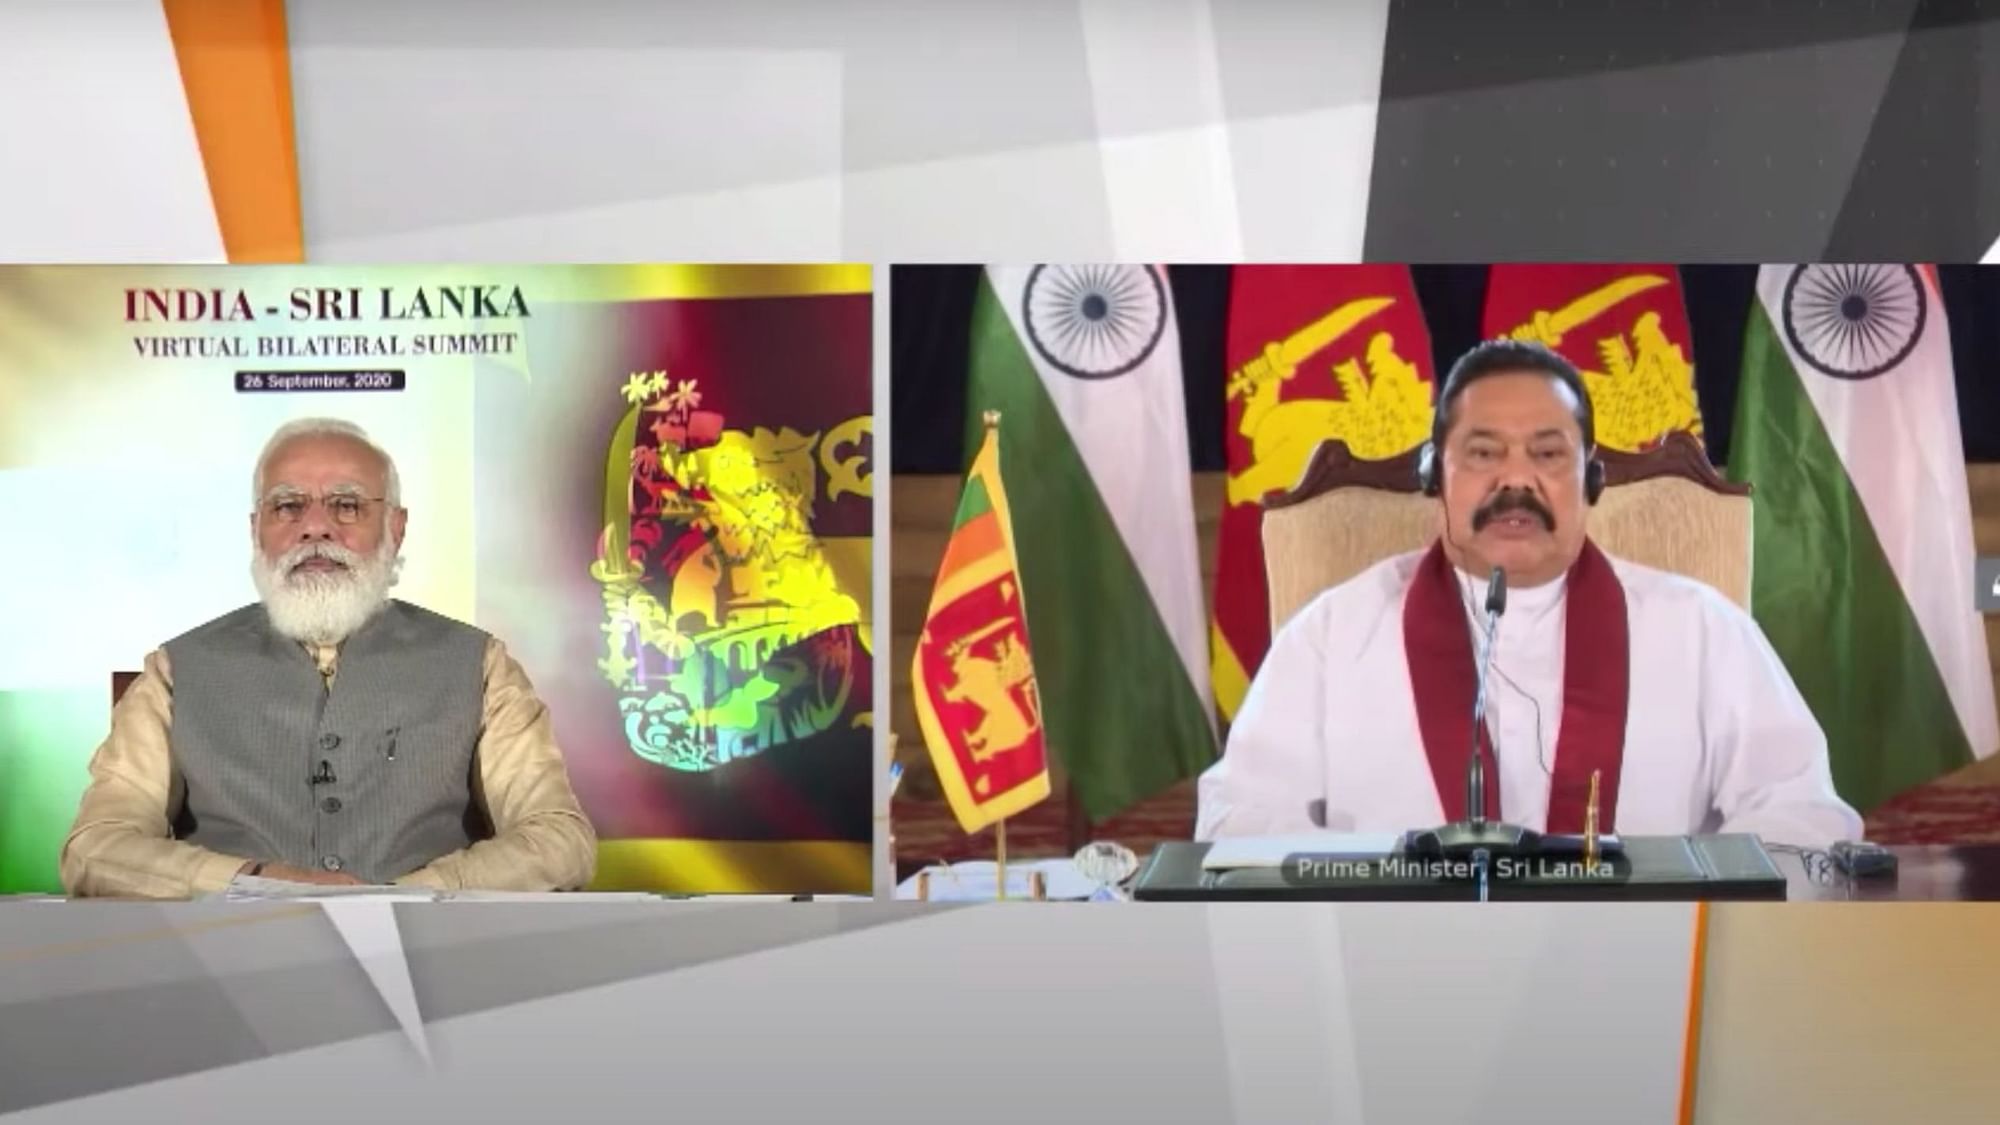 PM Modi and Sri Lankan PM Mahinda Rajapaksa during the virtual bilateral summit.